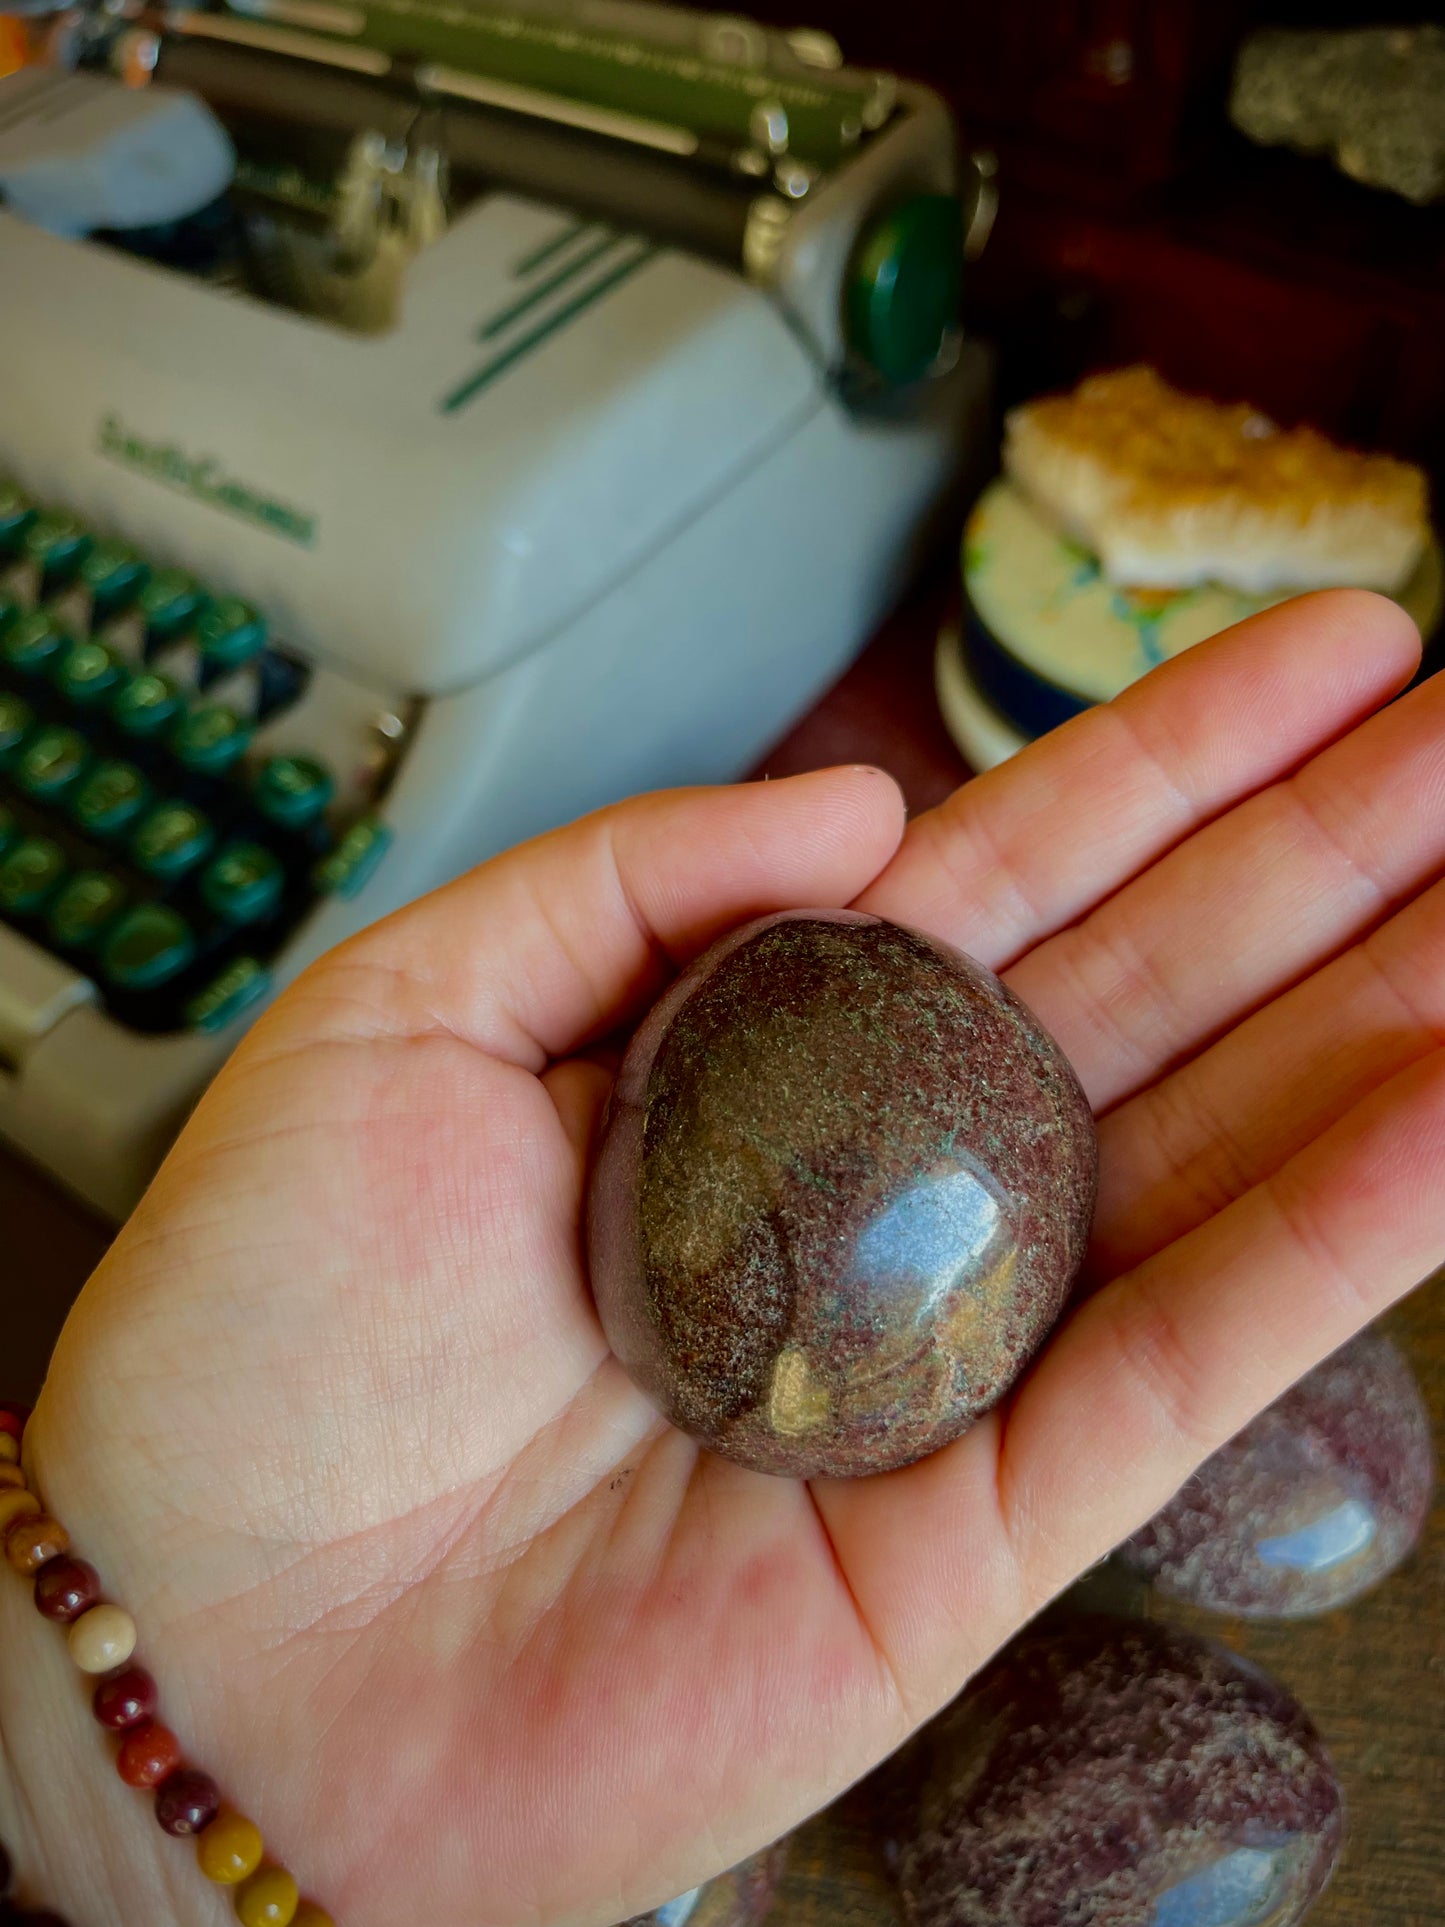 Garnet palm stone in a hand near a green typewriter.